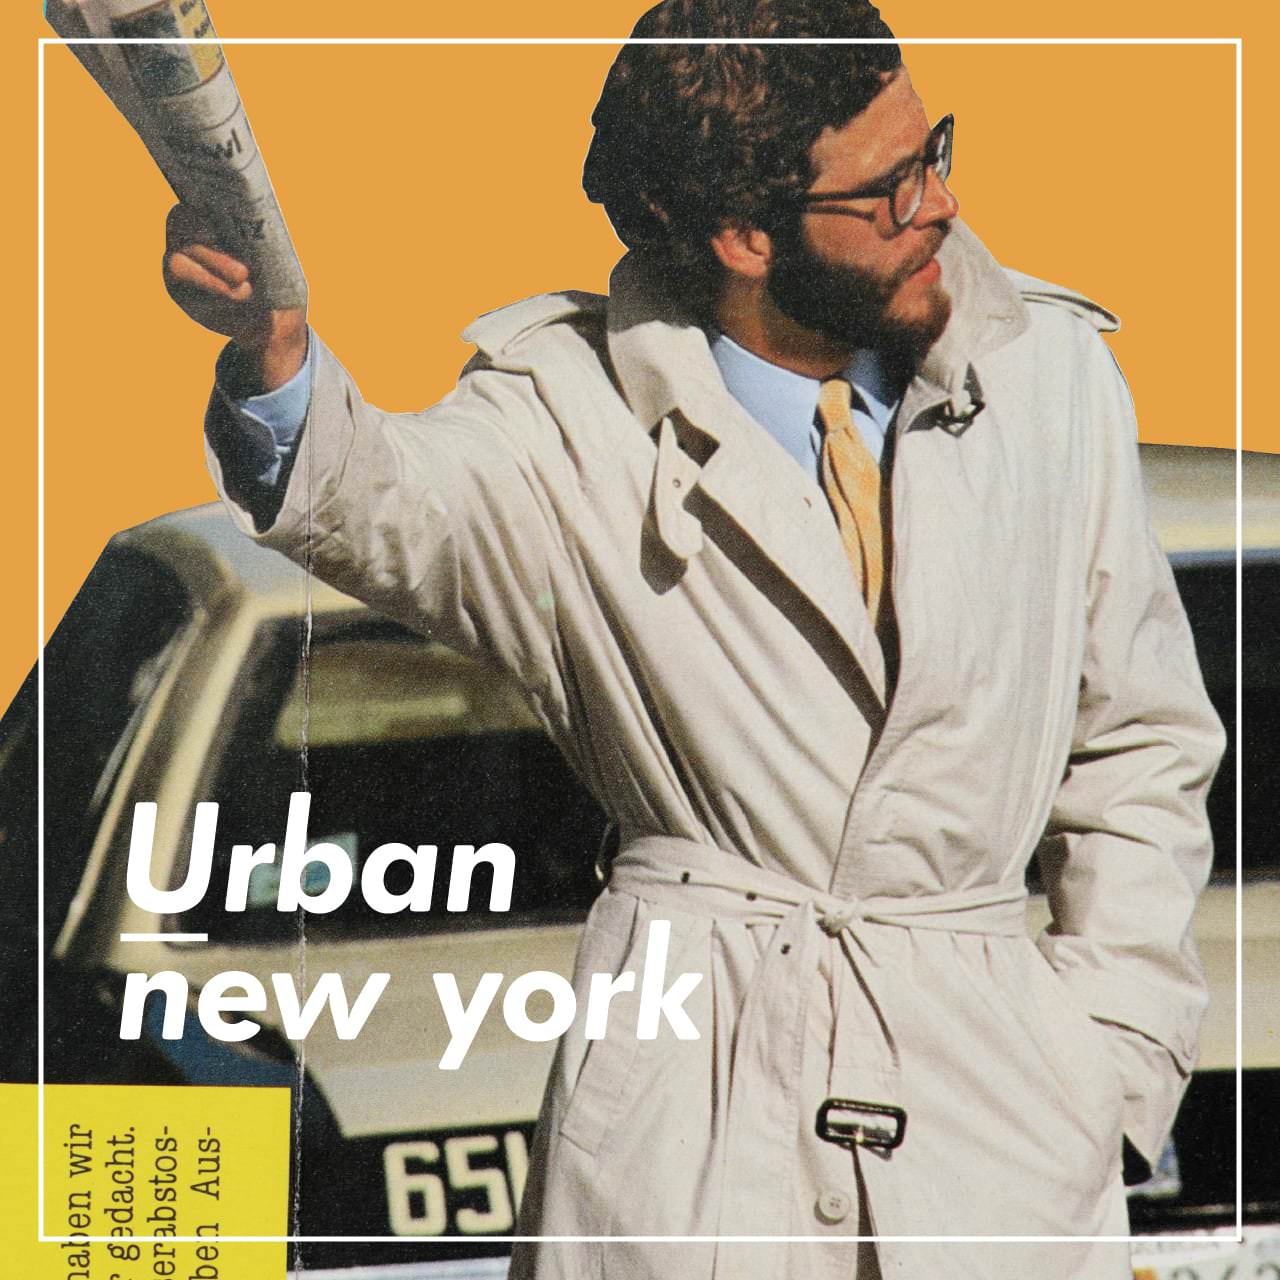 Urban new york